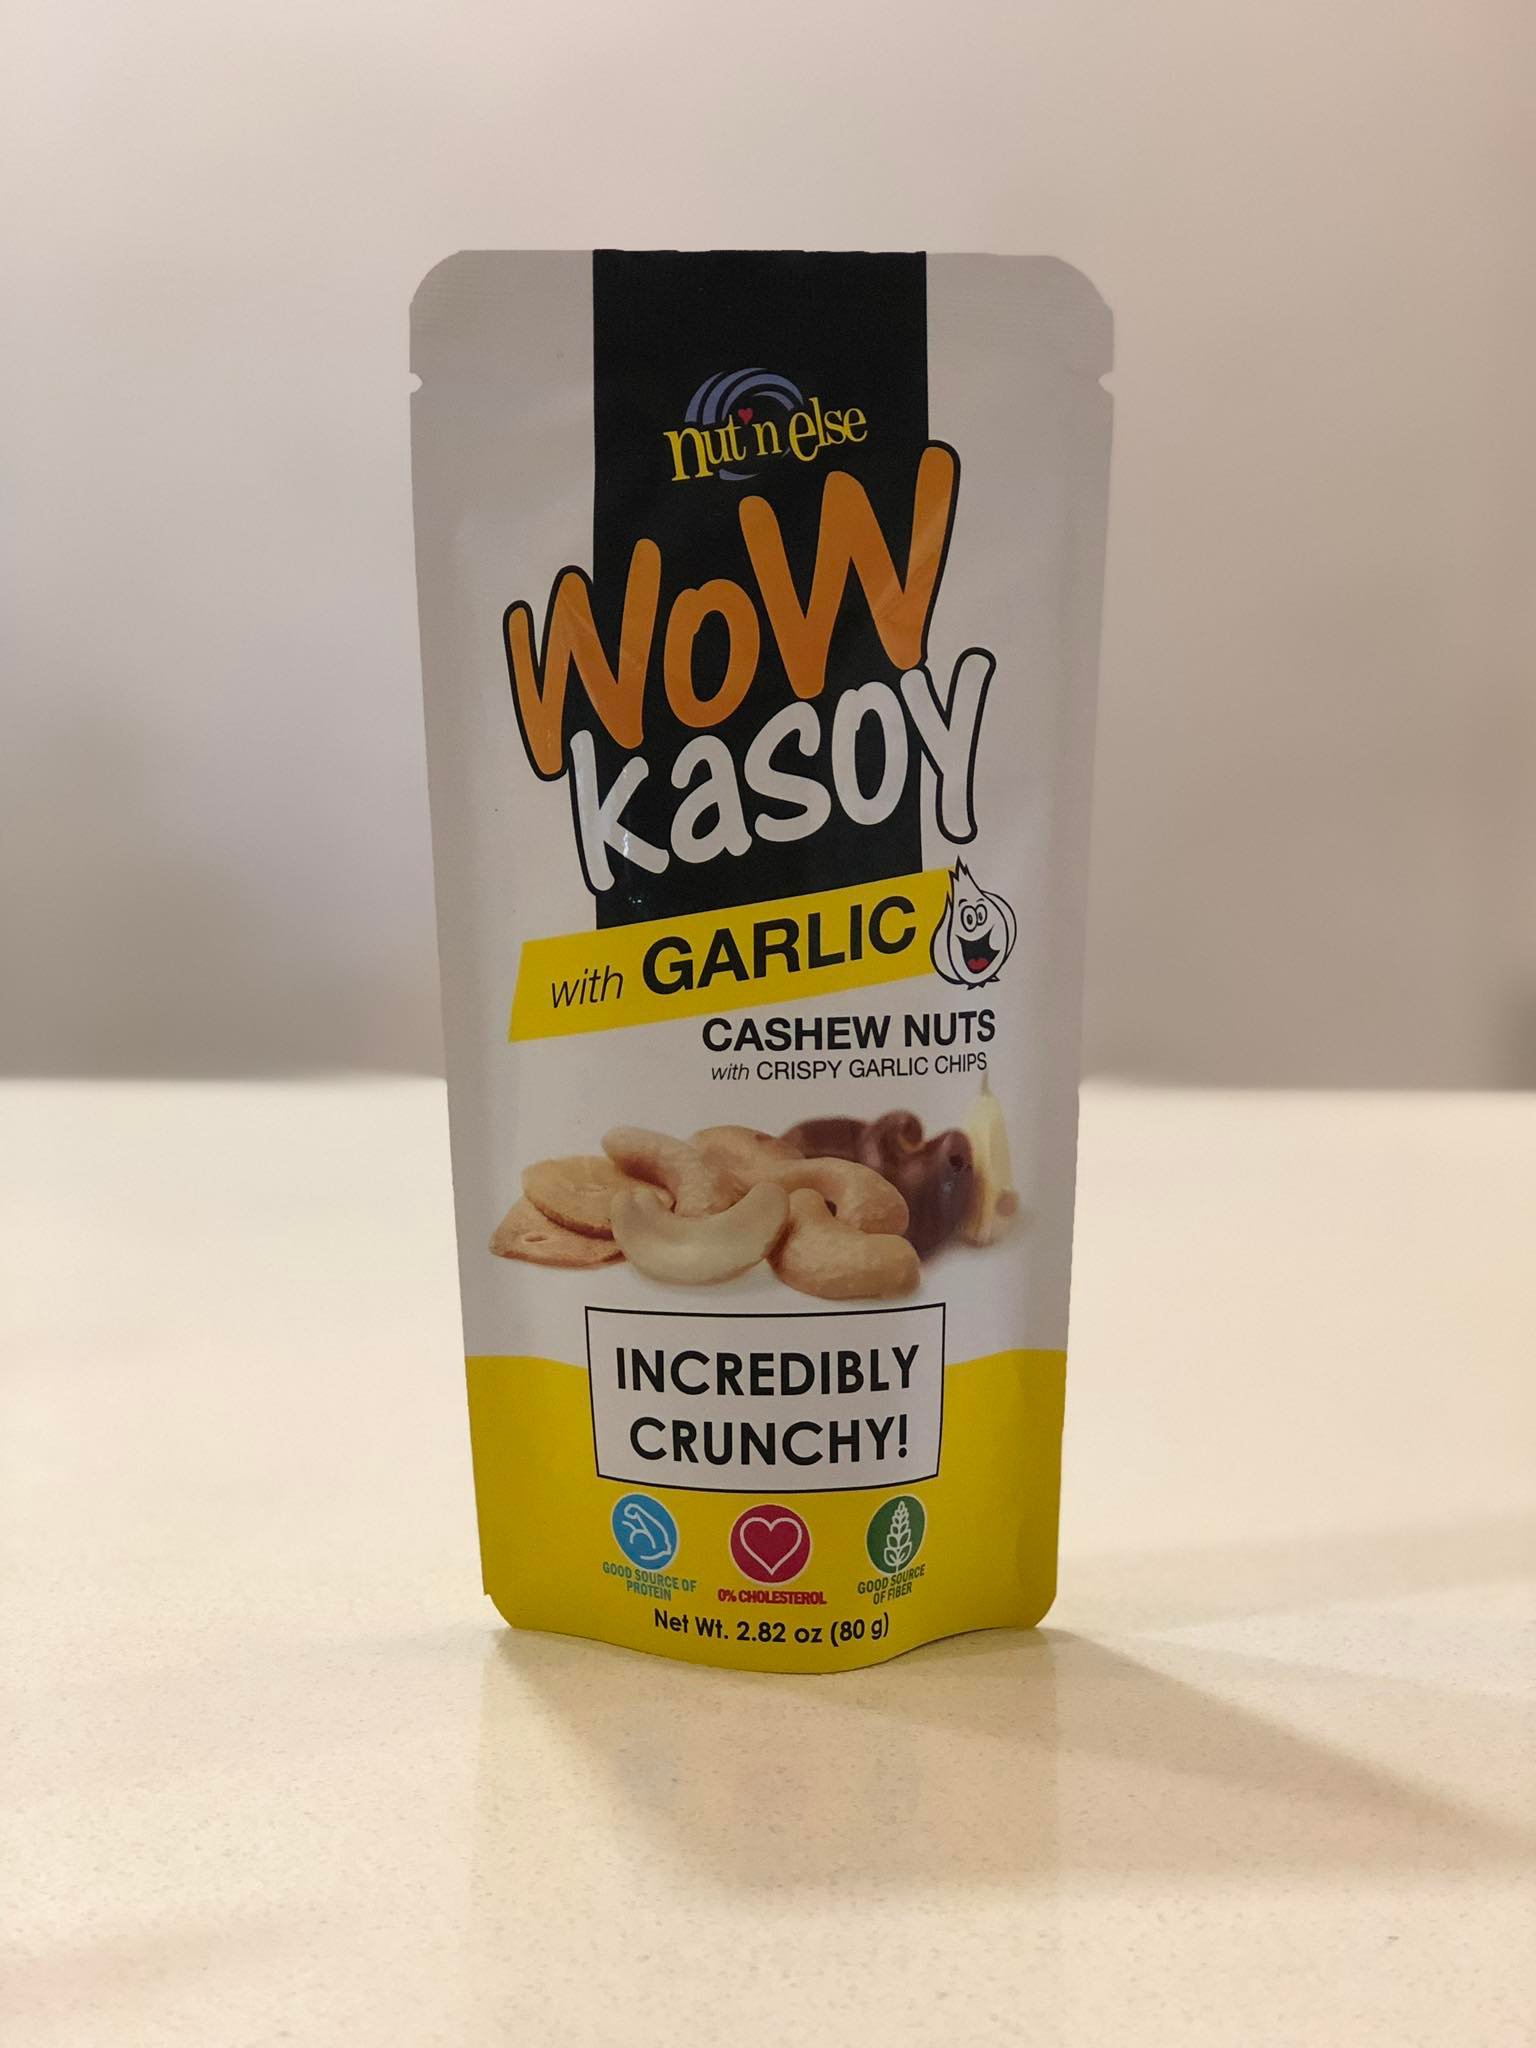 Cashew Nuts with Crispy Garlic Chips